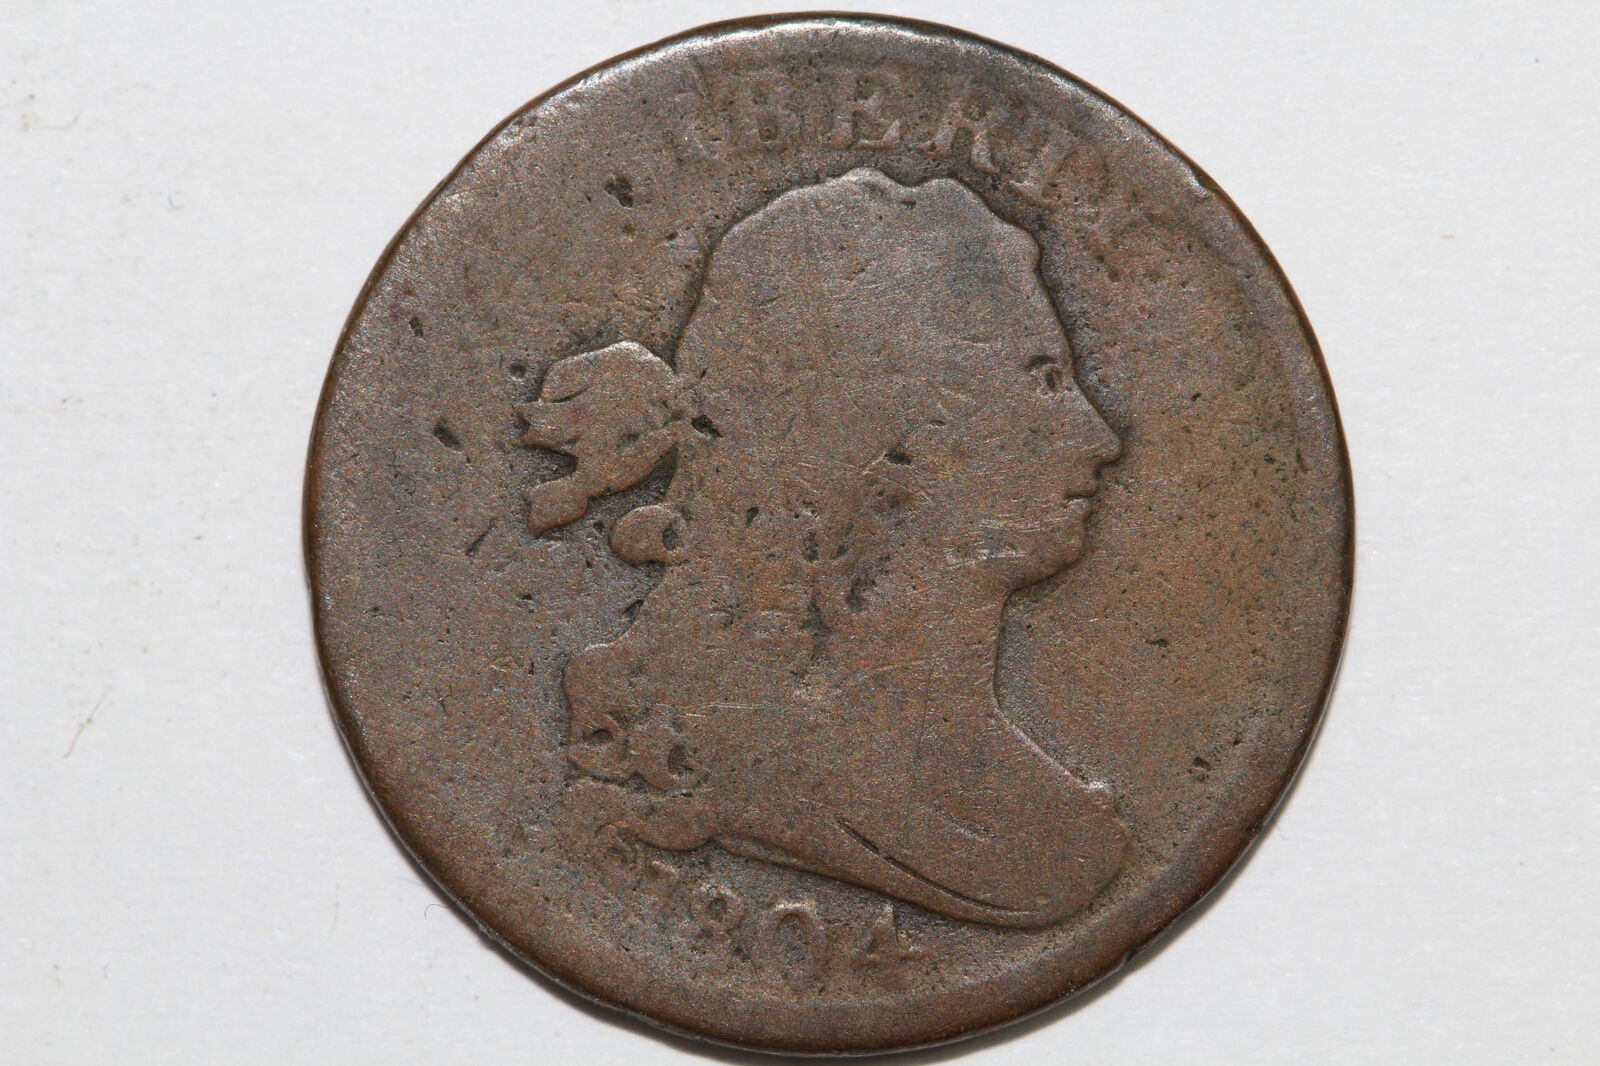 1804 Plain 4 Draped Bust Half Cent Coin (hlc267)